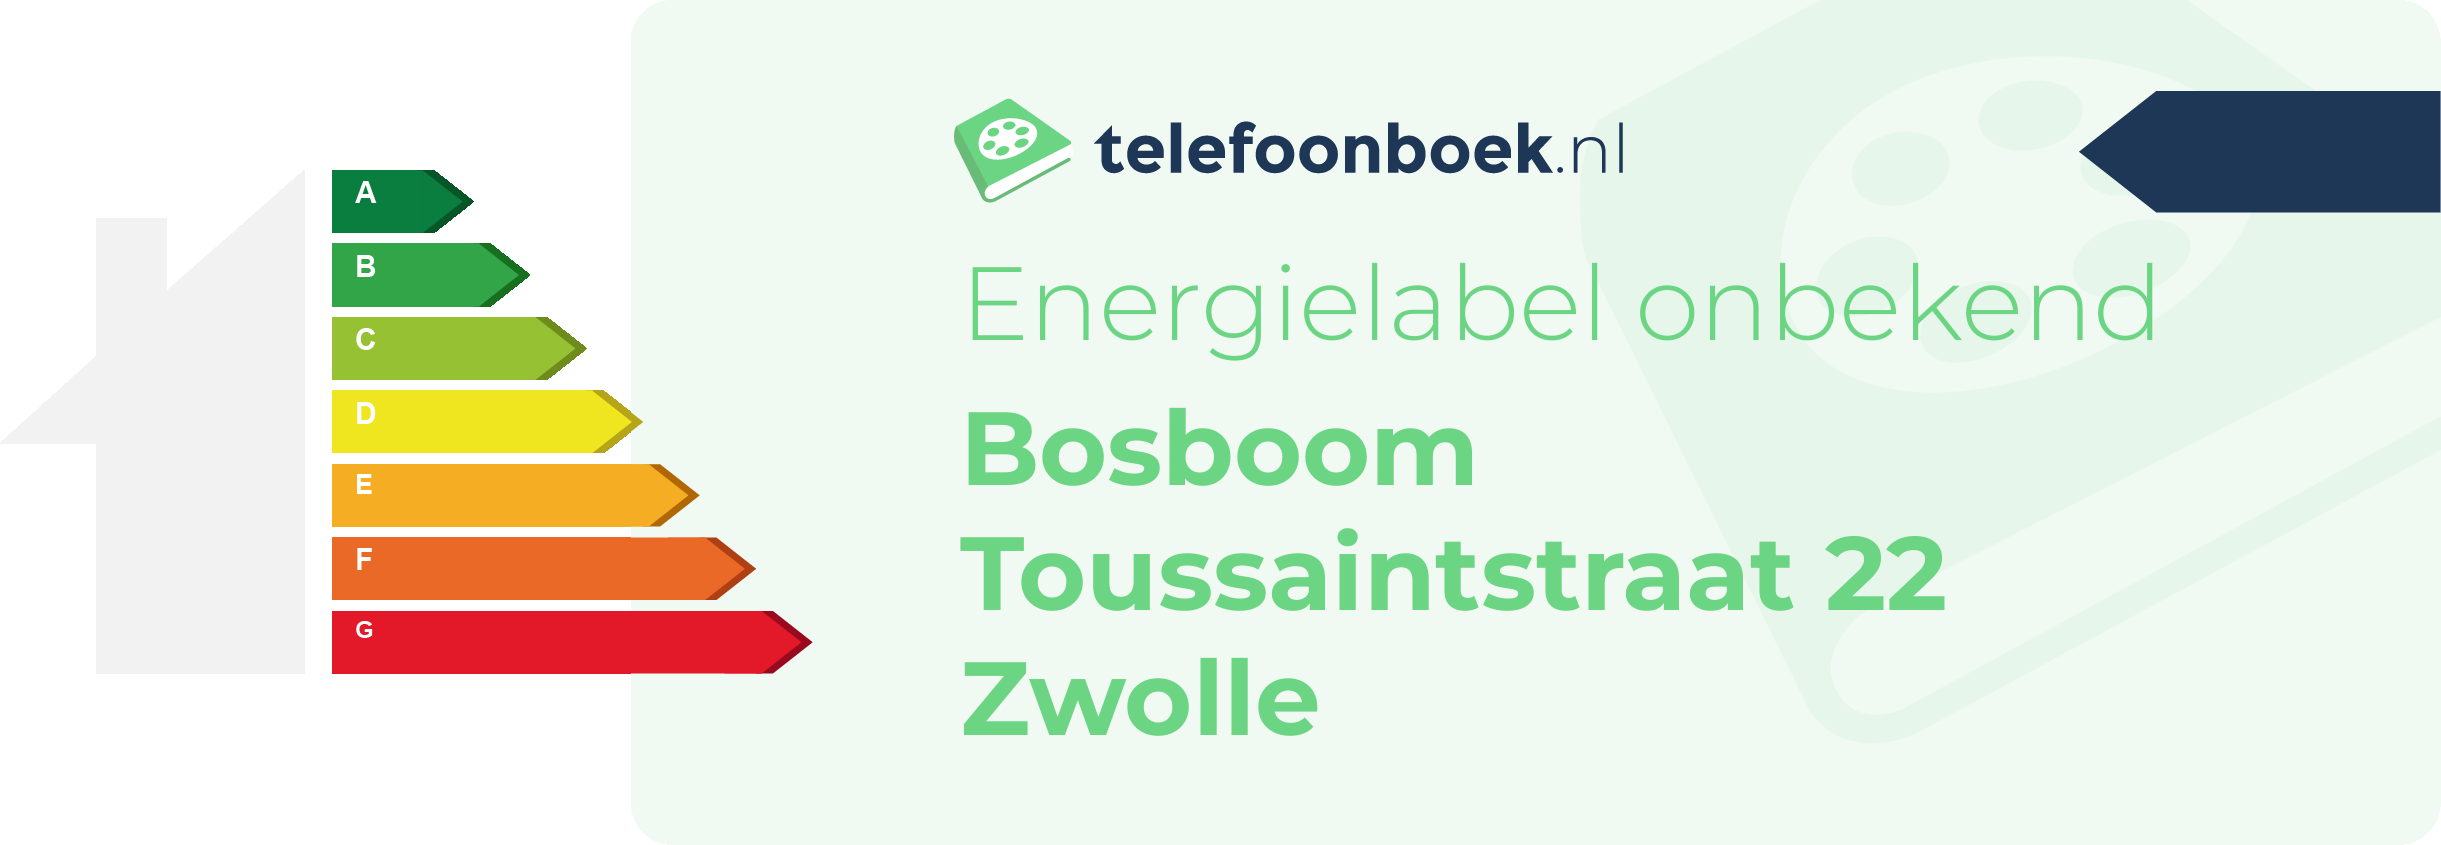 Energielabel Bosboom Toussaintstraat 22 Zwolle